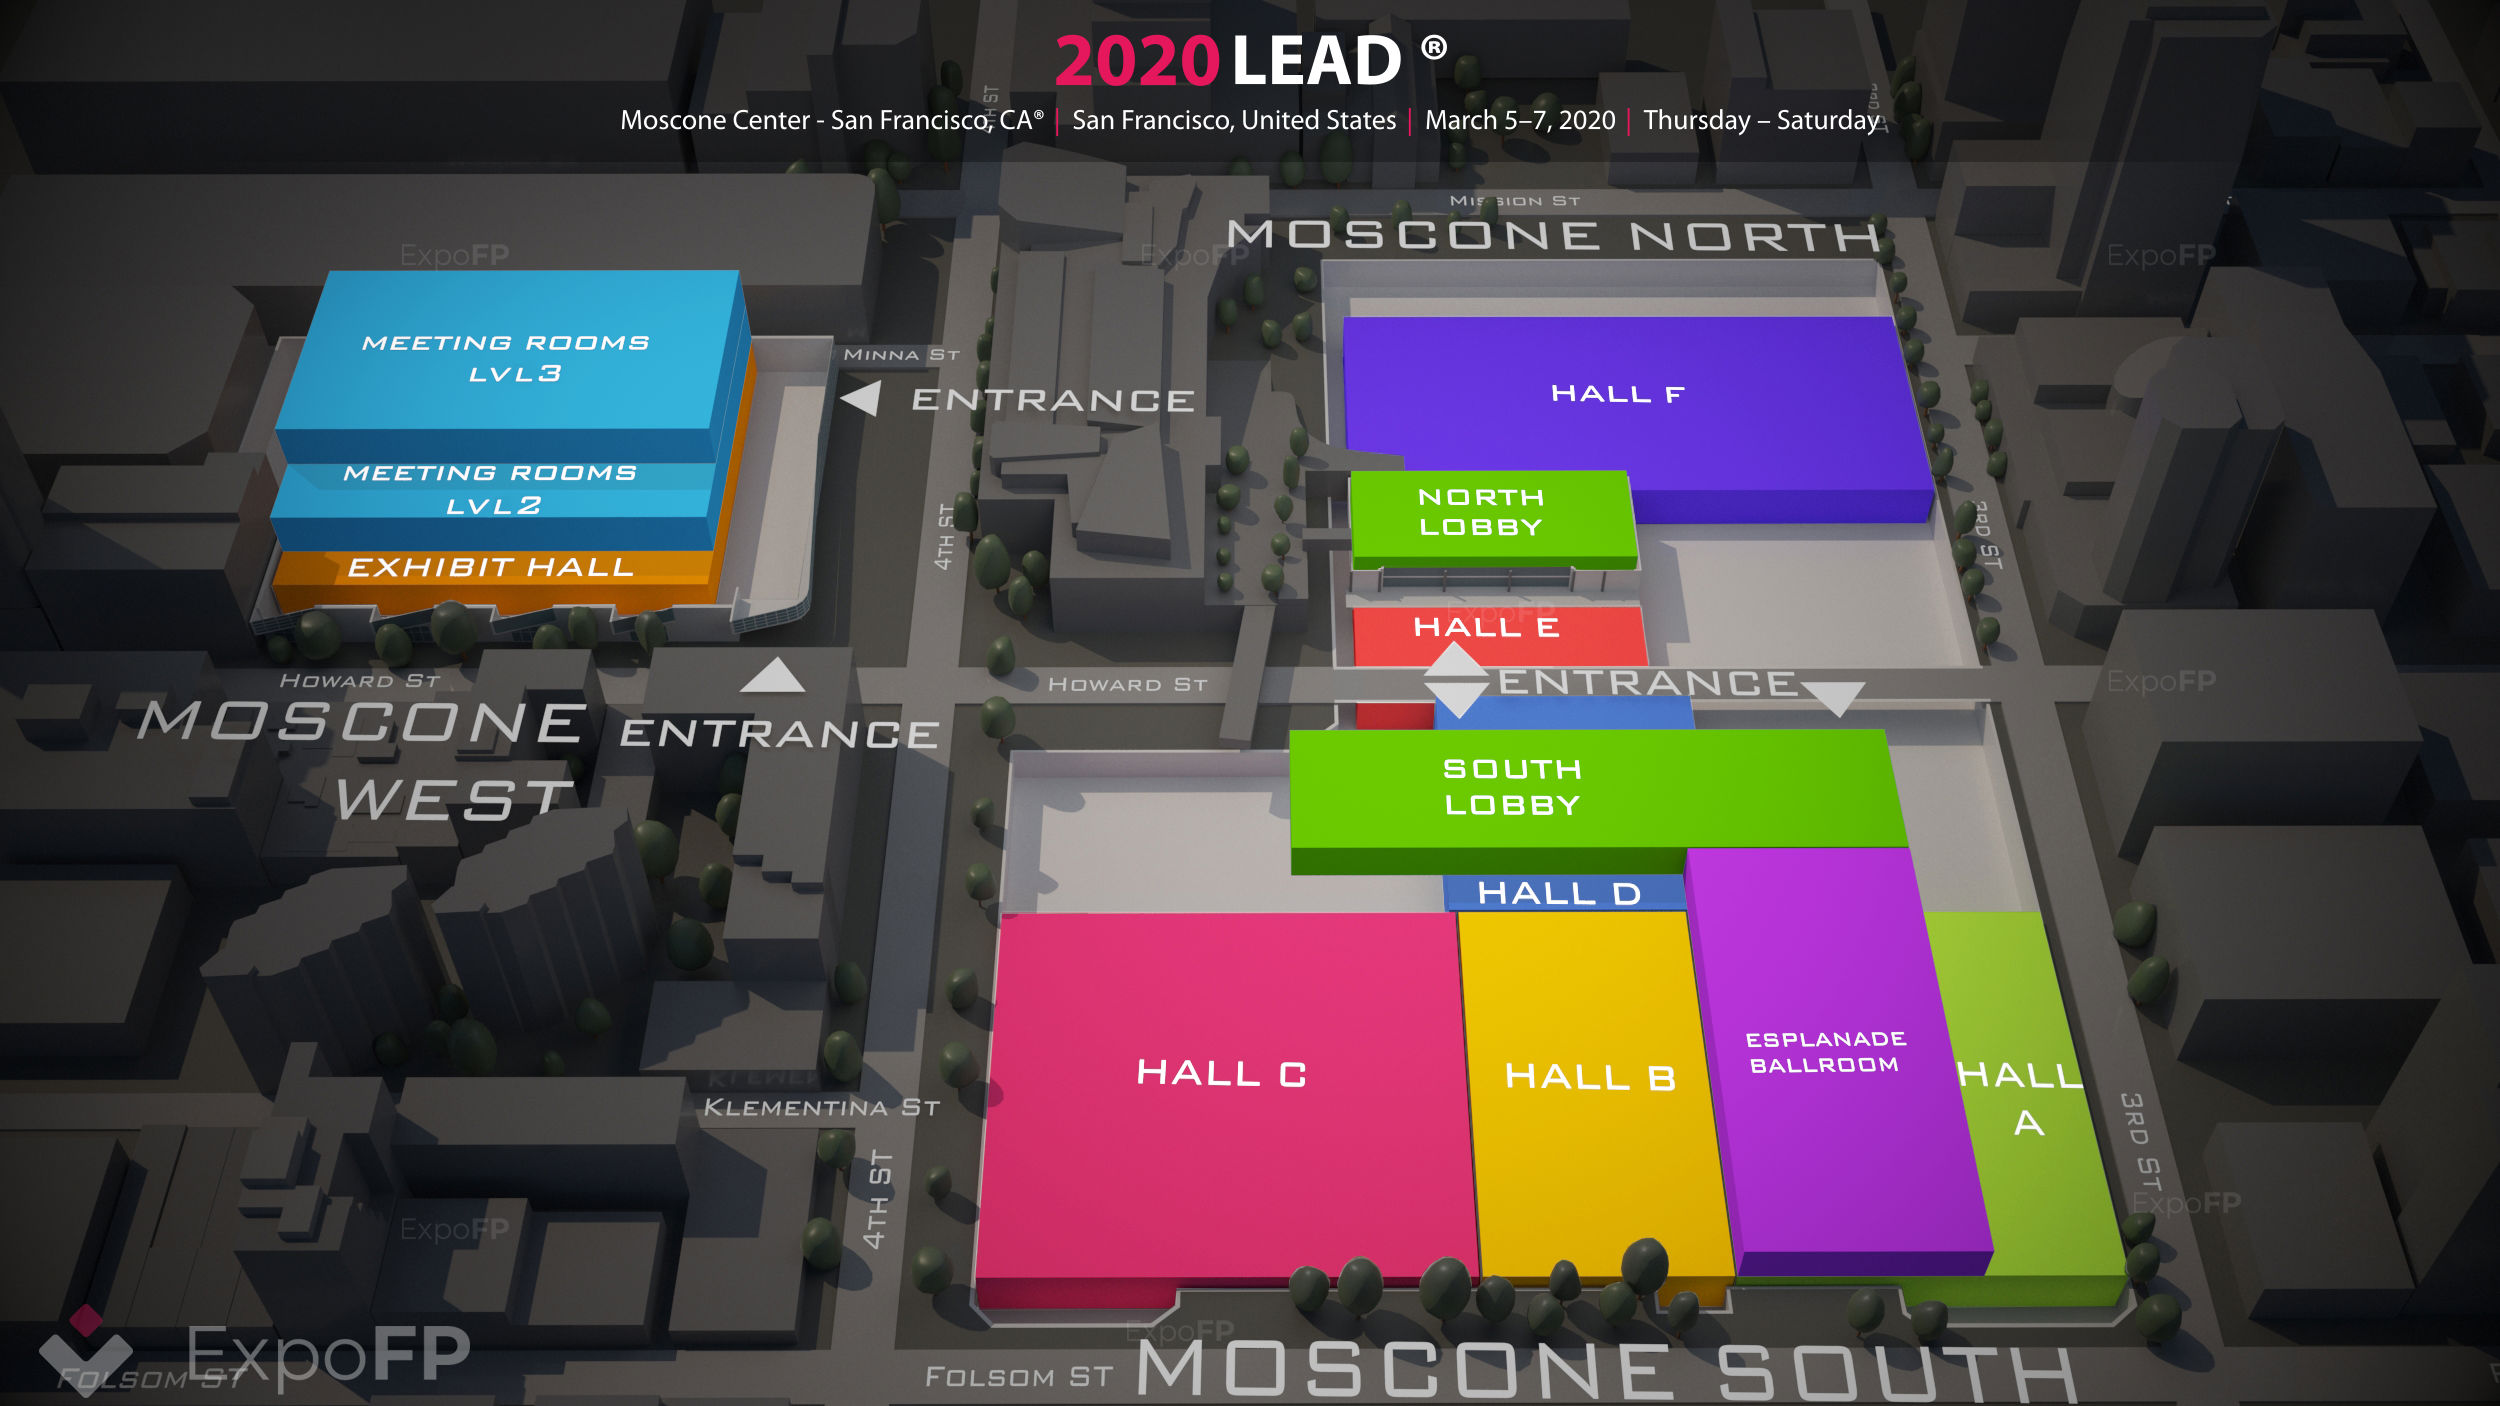 LEAD 2020 in Moscone Center - San Francisco, CA